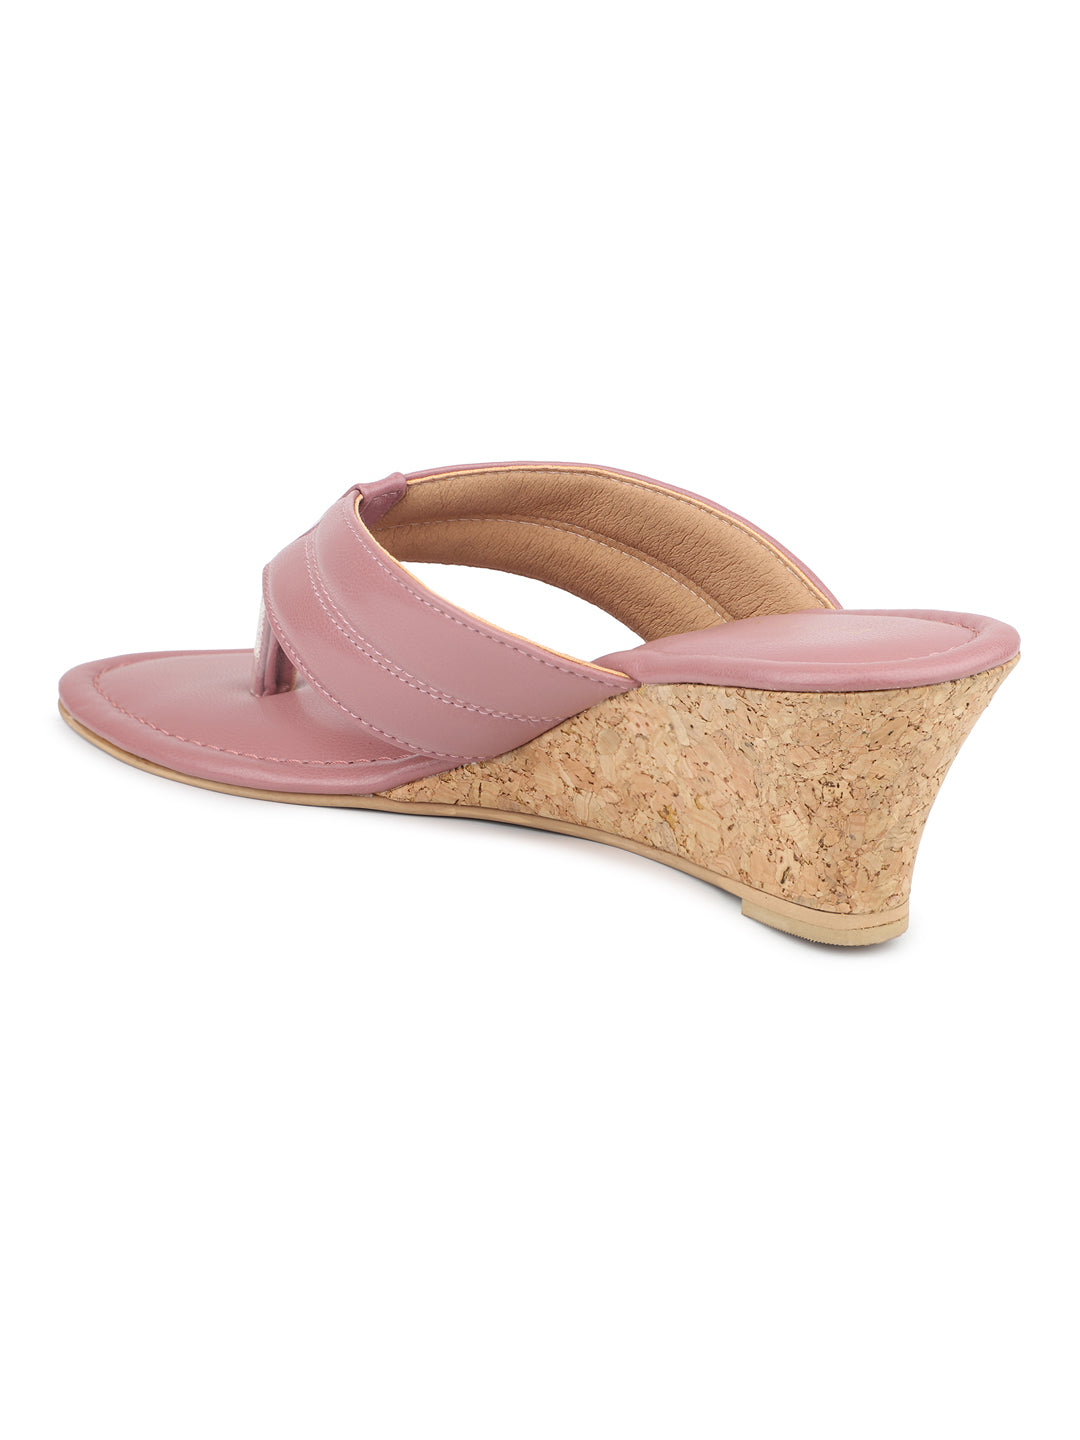 Classic Wedge Comfort Sandal